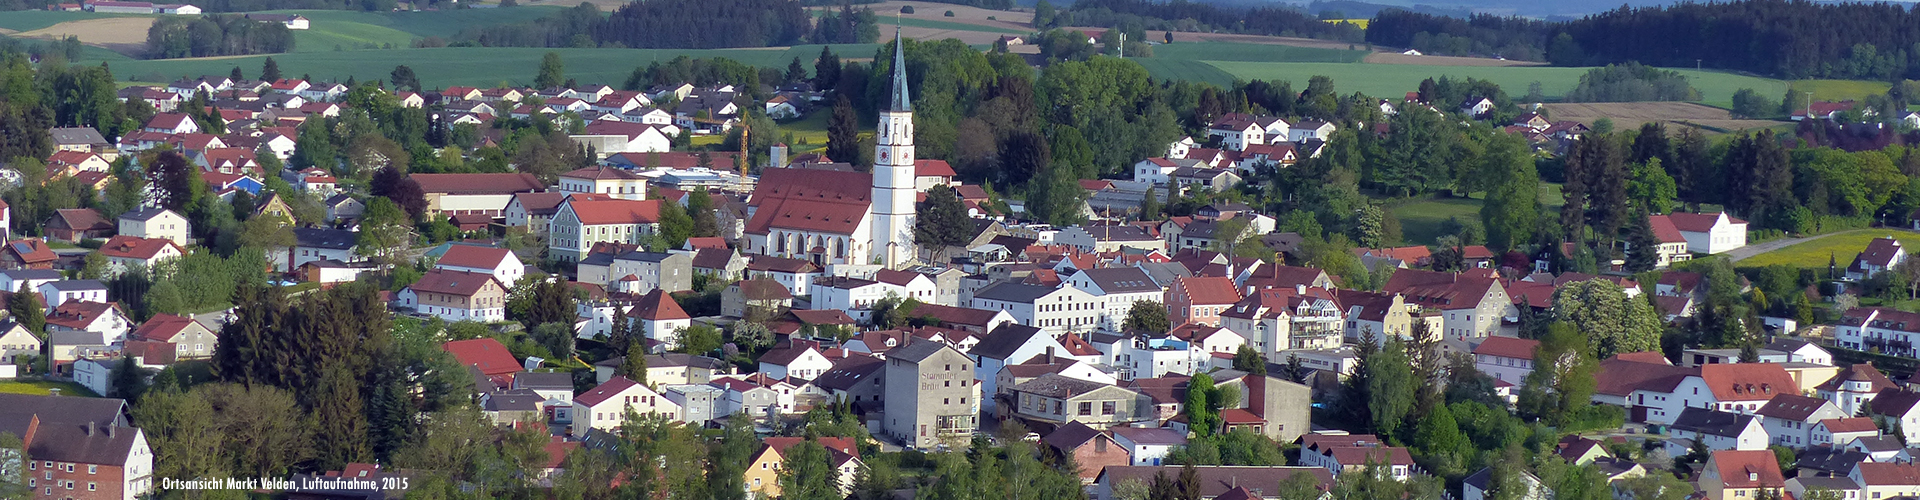 Ortsansicht Markt Velden mit Kirchturm